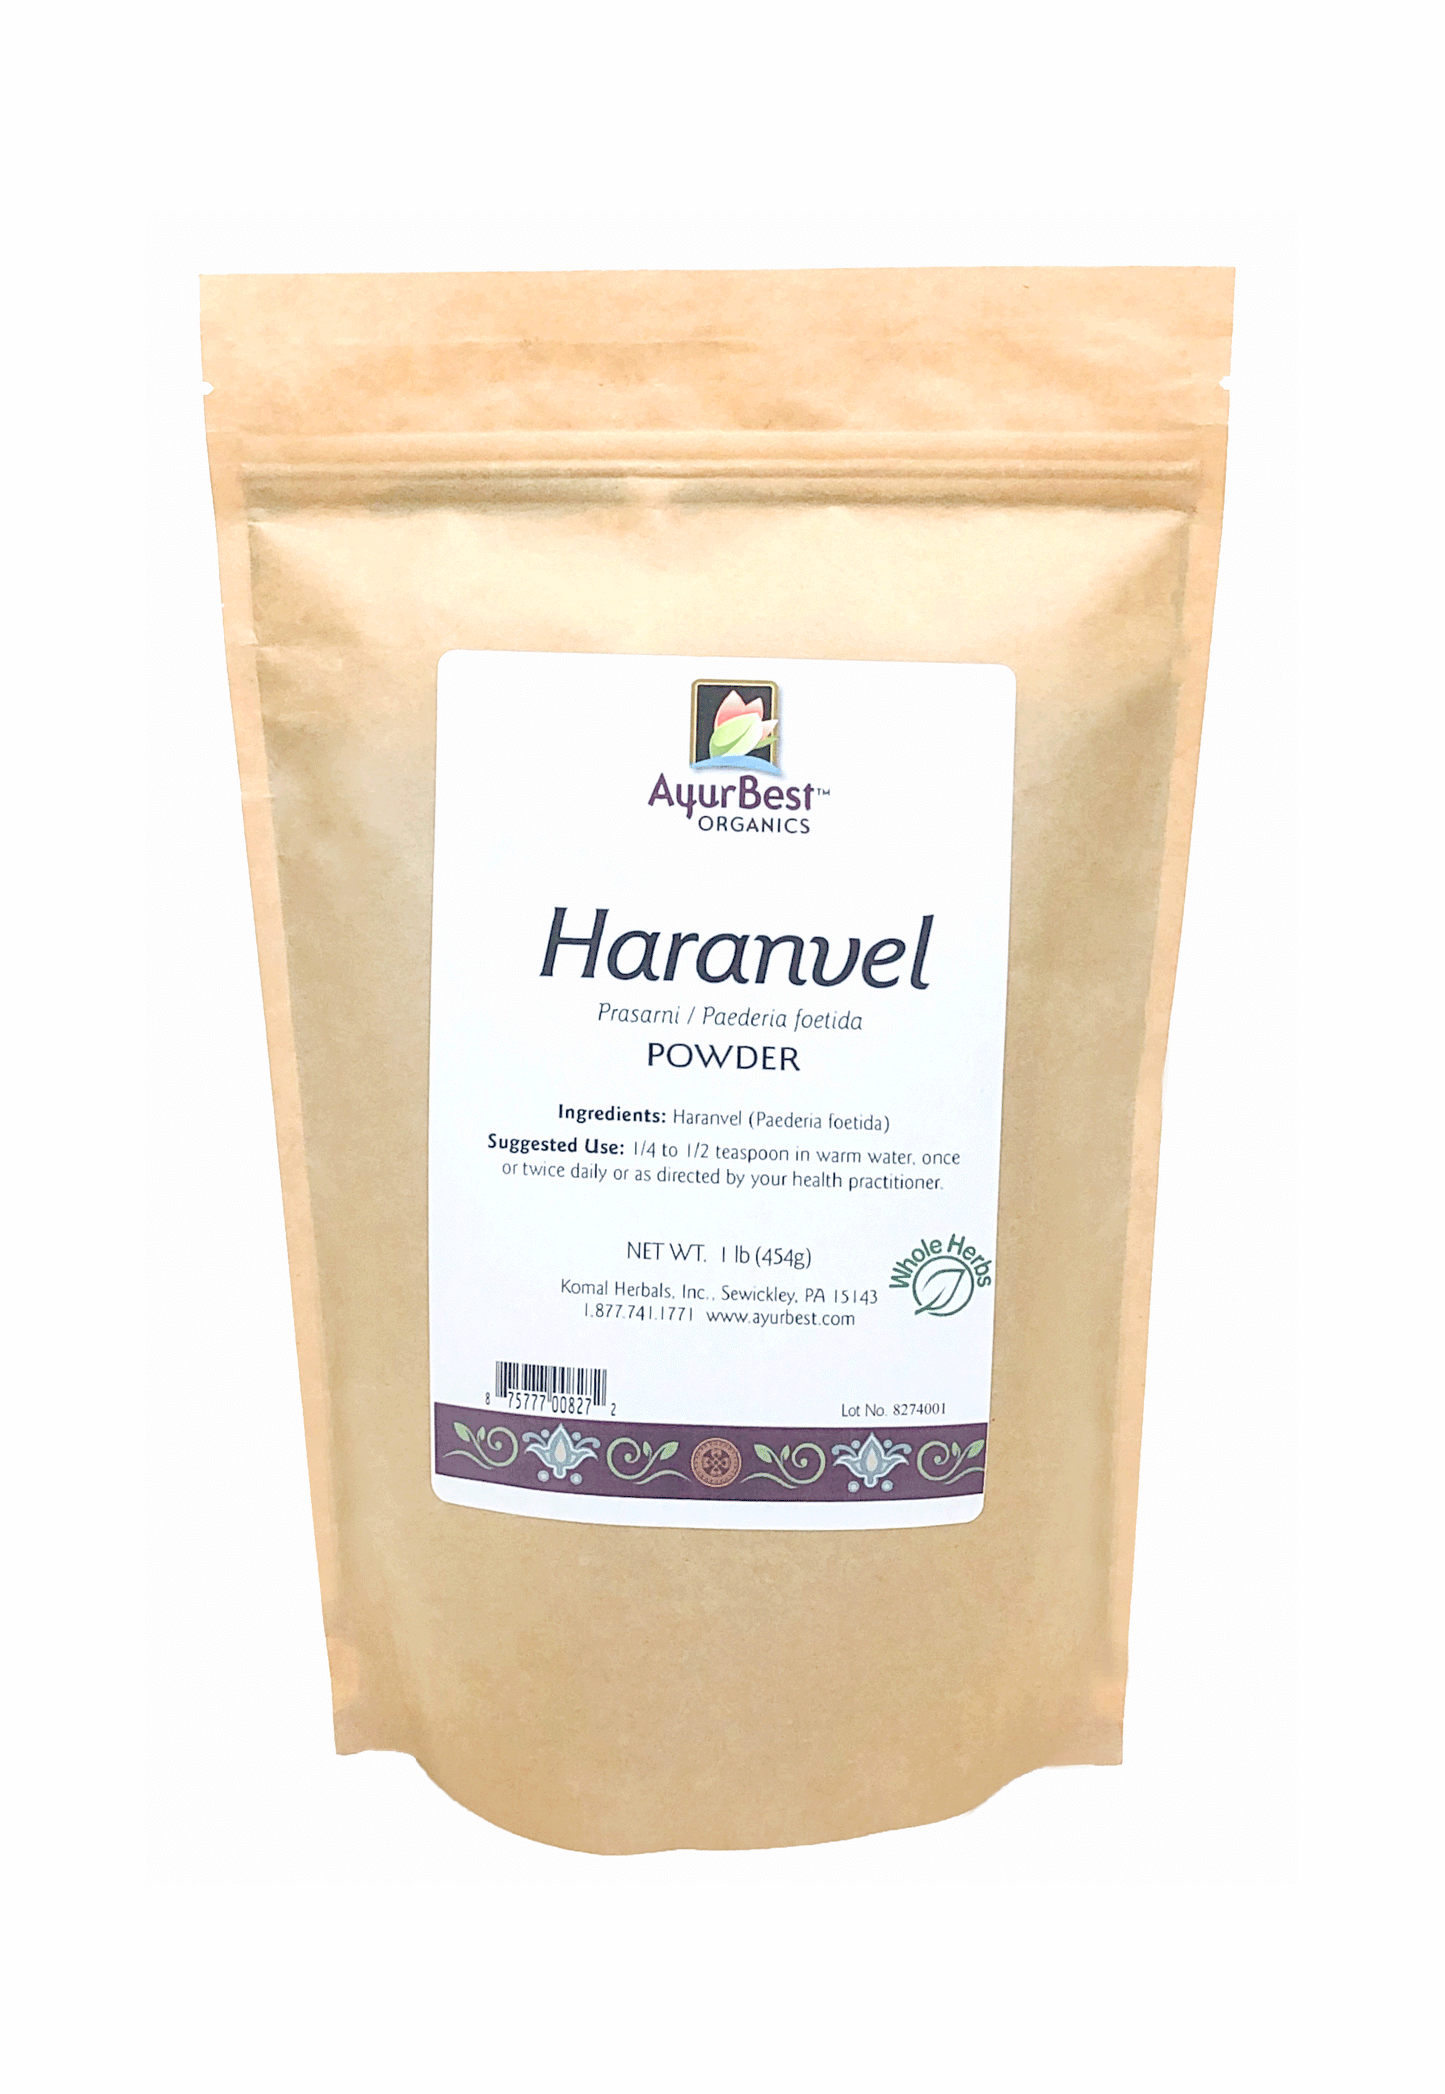 Buy Organic Haranvel Powder in bulk, 1lb size.